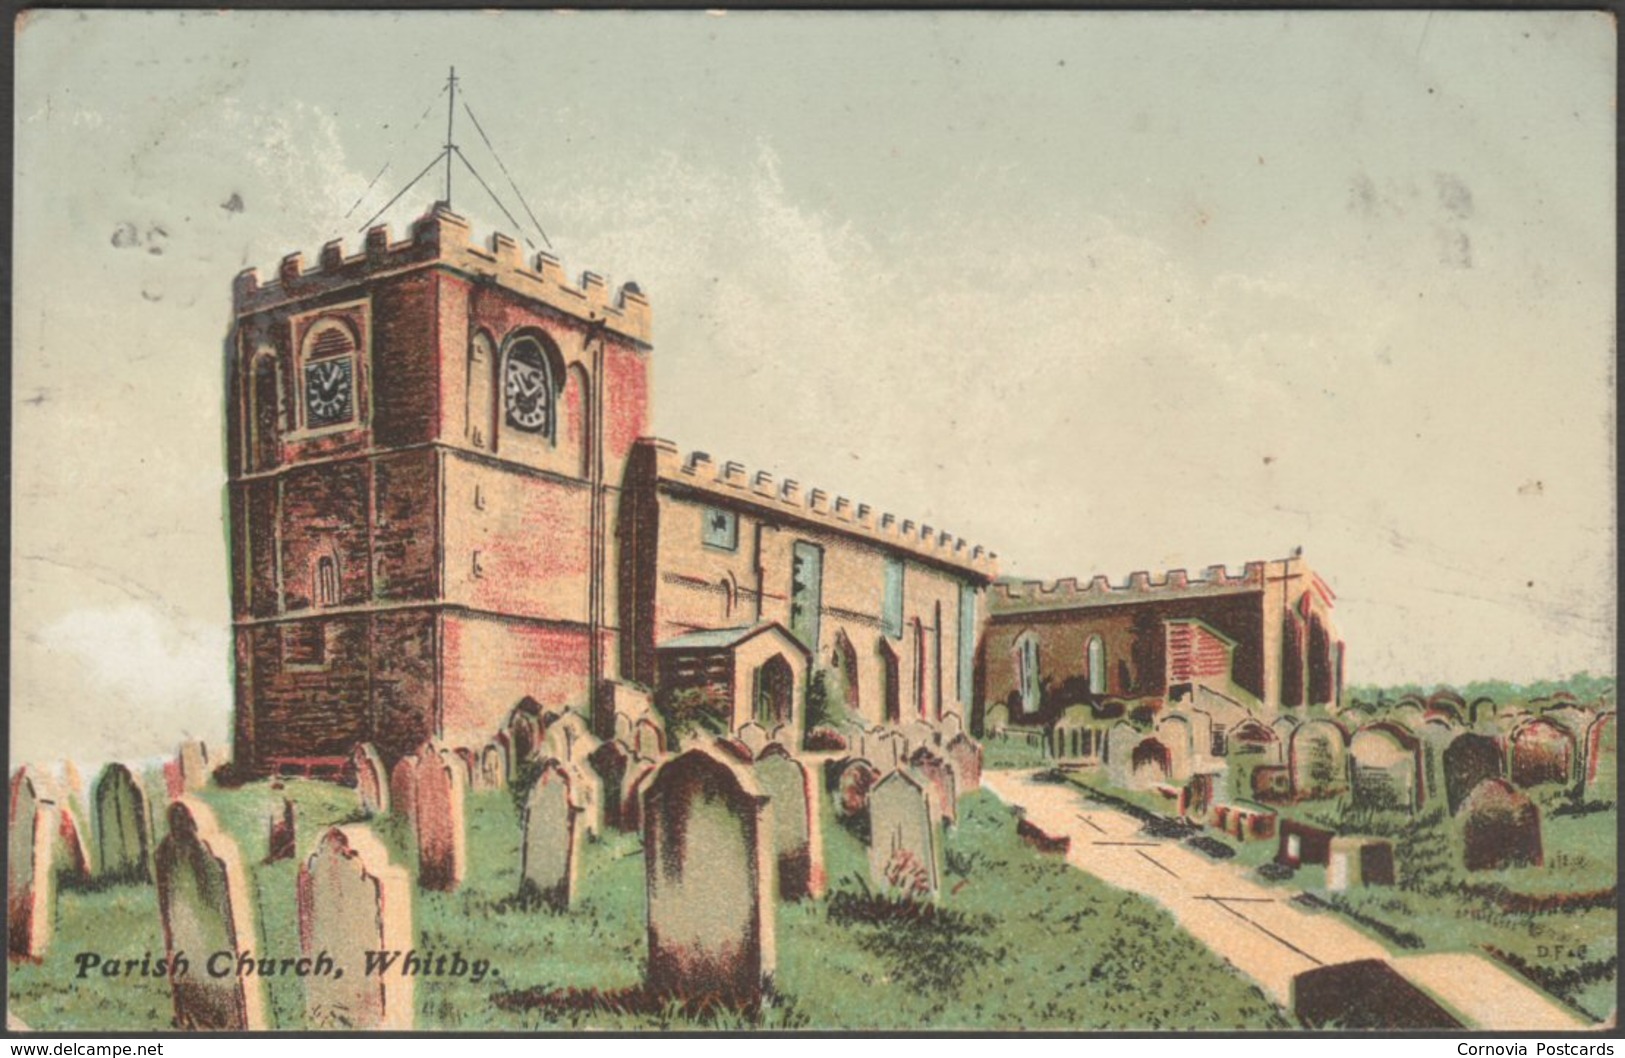 Parish Church, Whitby, Yorkshire, 1905 - Delittle, Fenwick & Co Postcard - Whitby